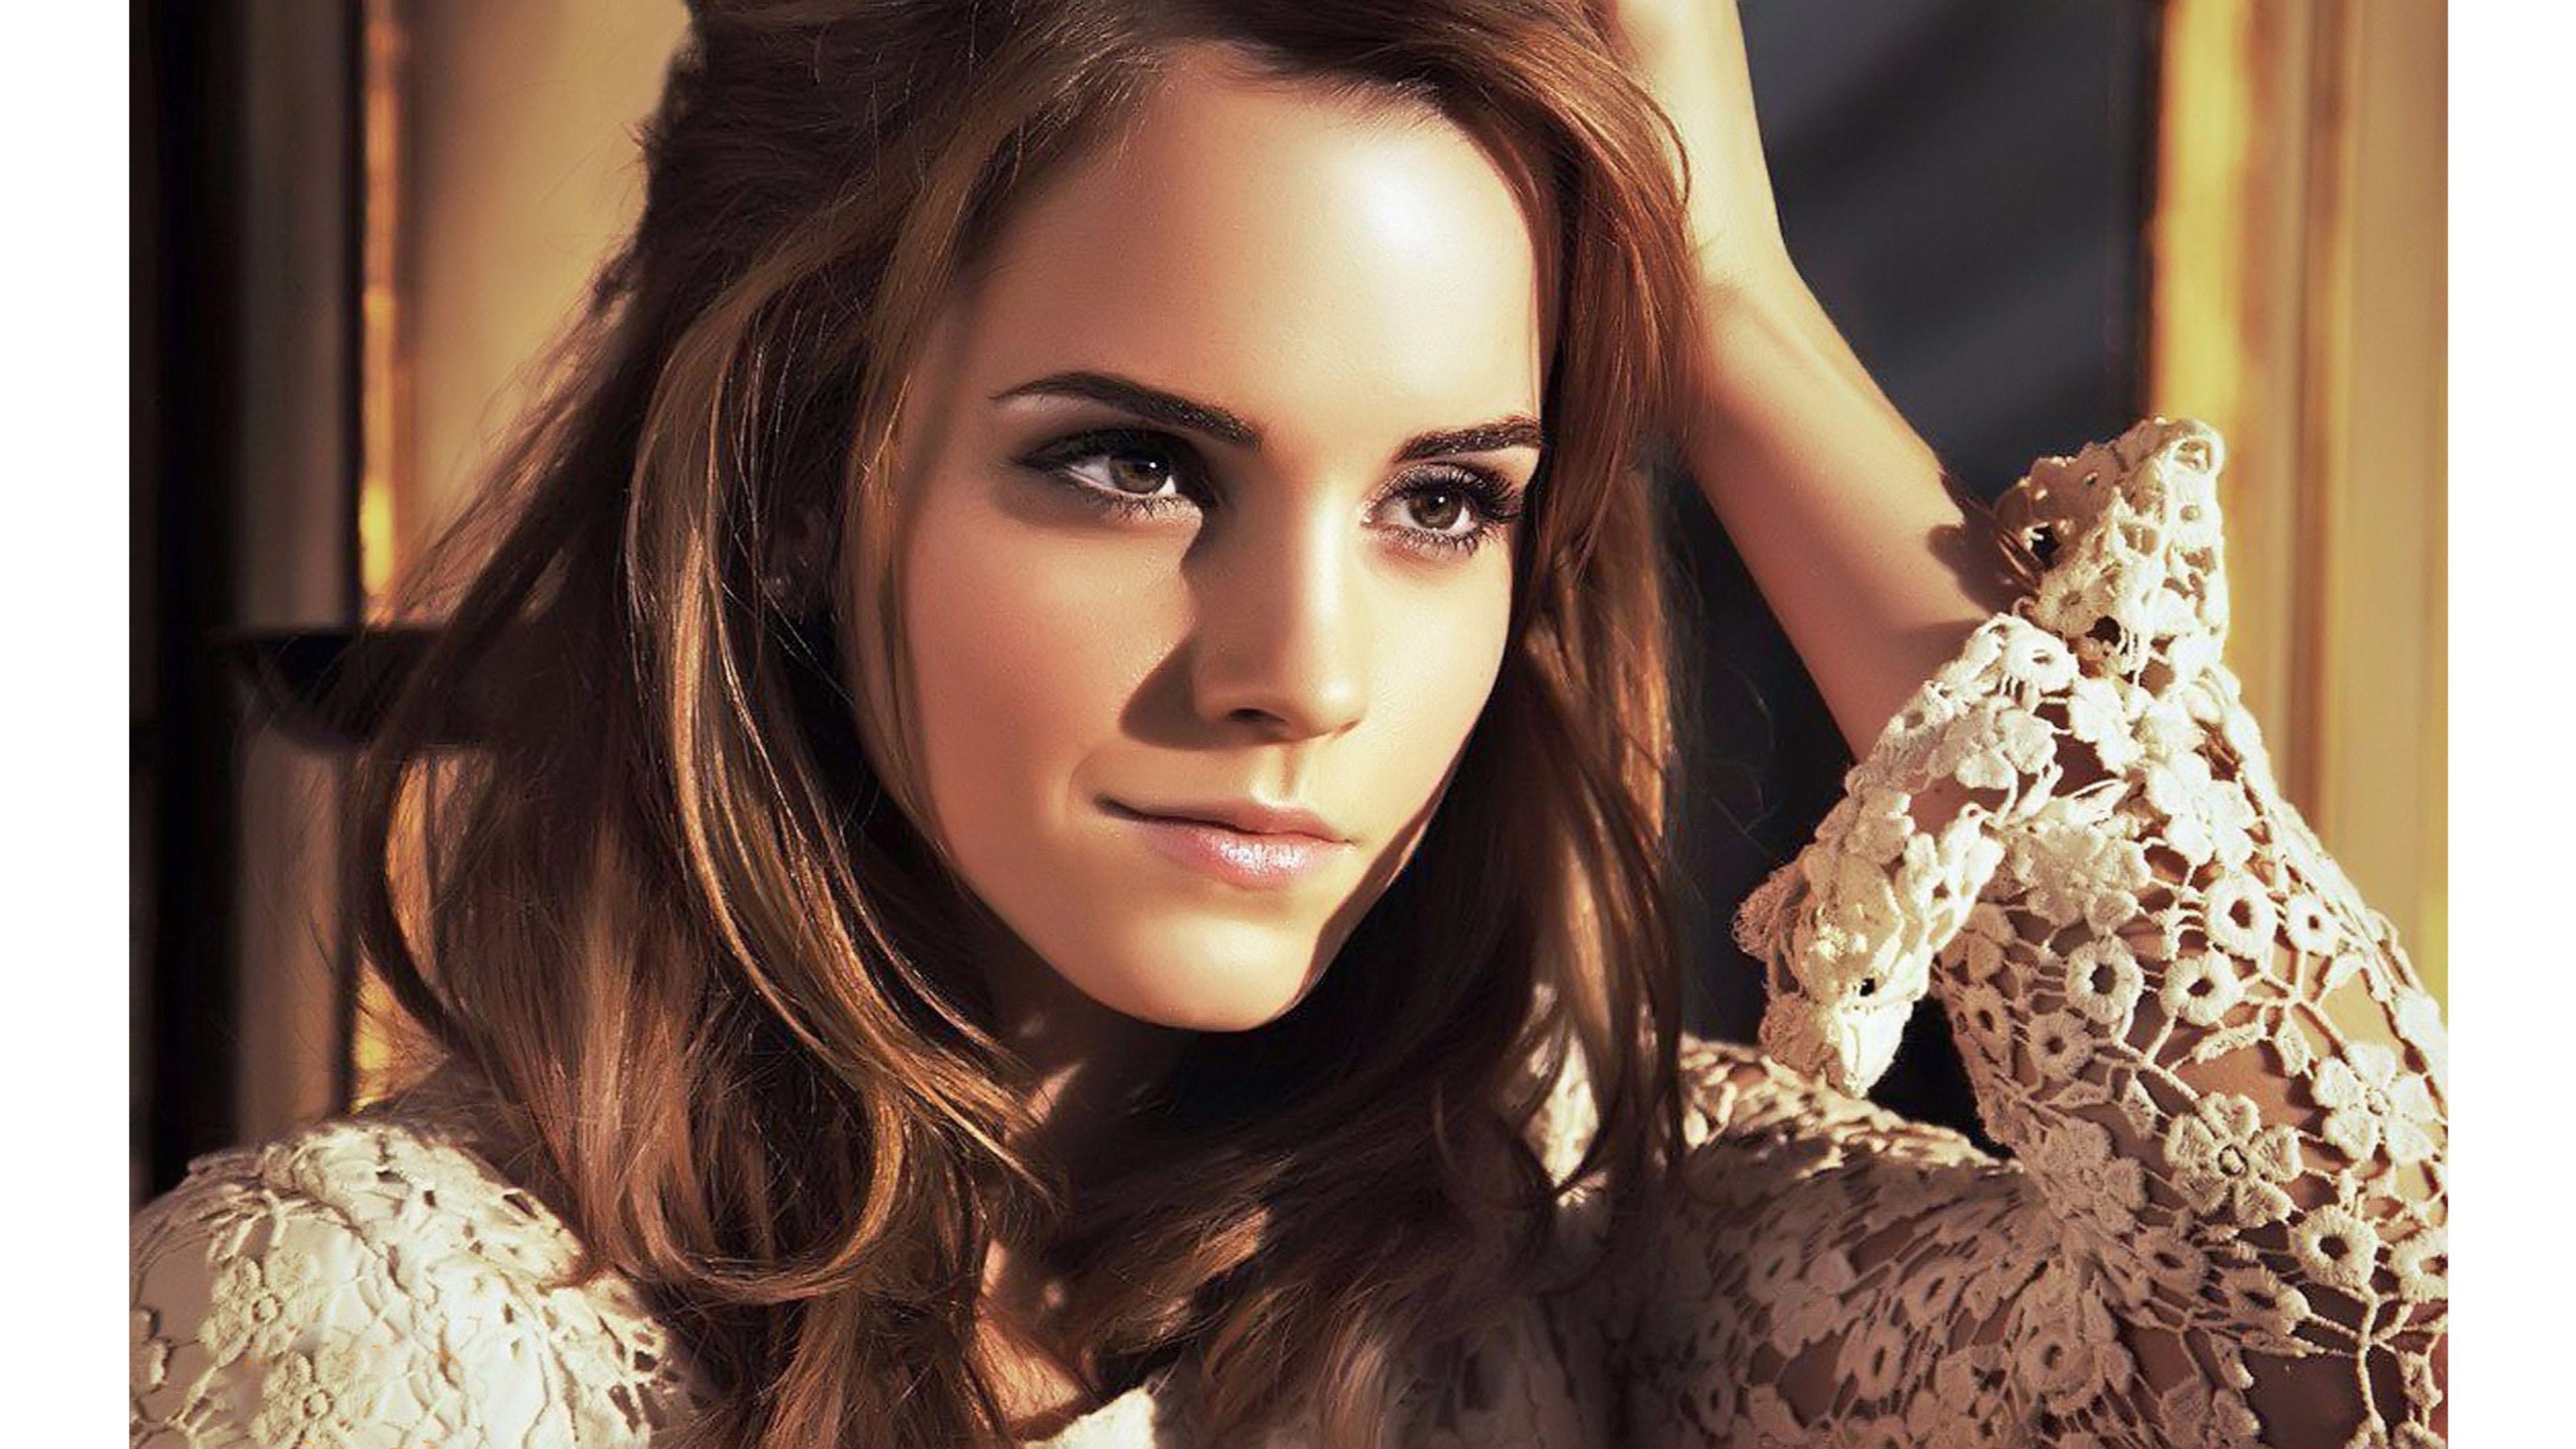 Free Download Emma Watson 4K Wallpaper. Free 4K Wallpaper